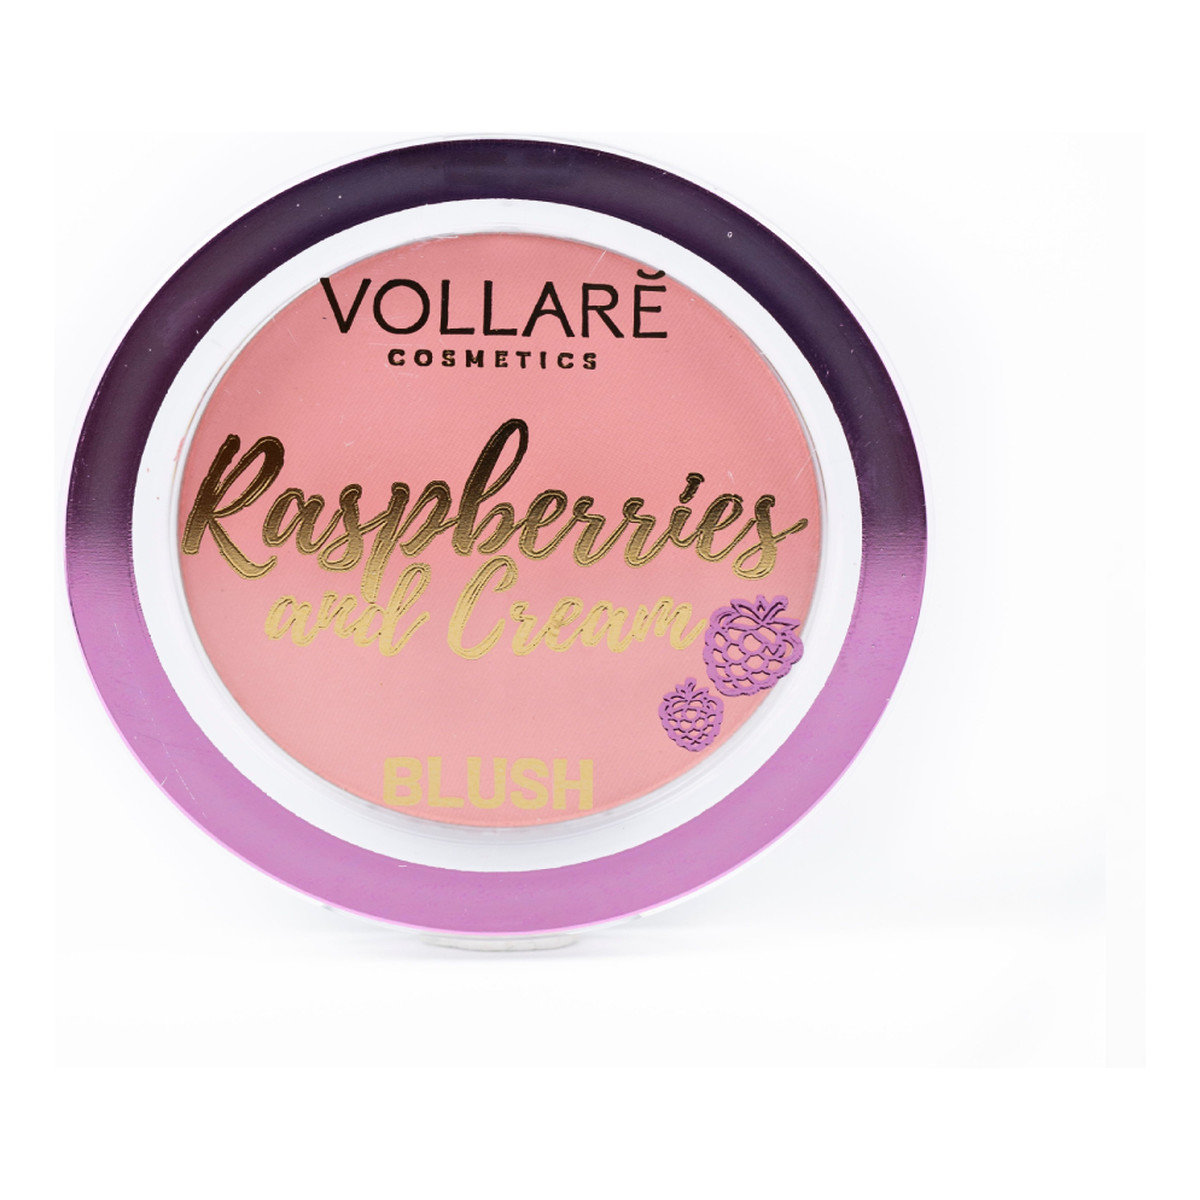 Vollare Raspberries and cream róż do policzków 02 yummy blush 5g